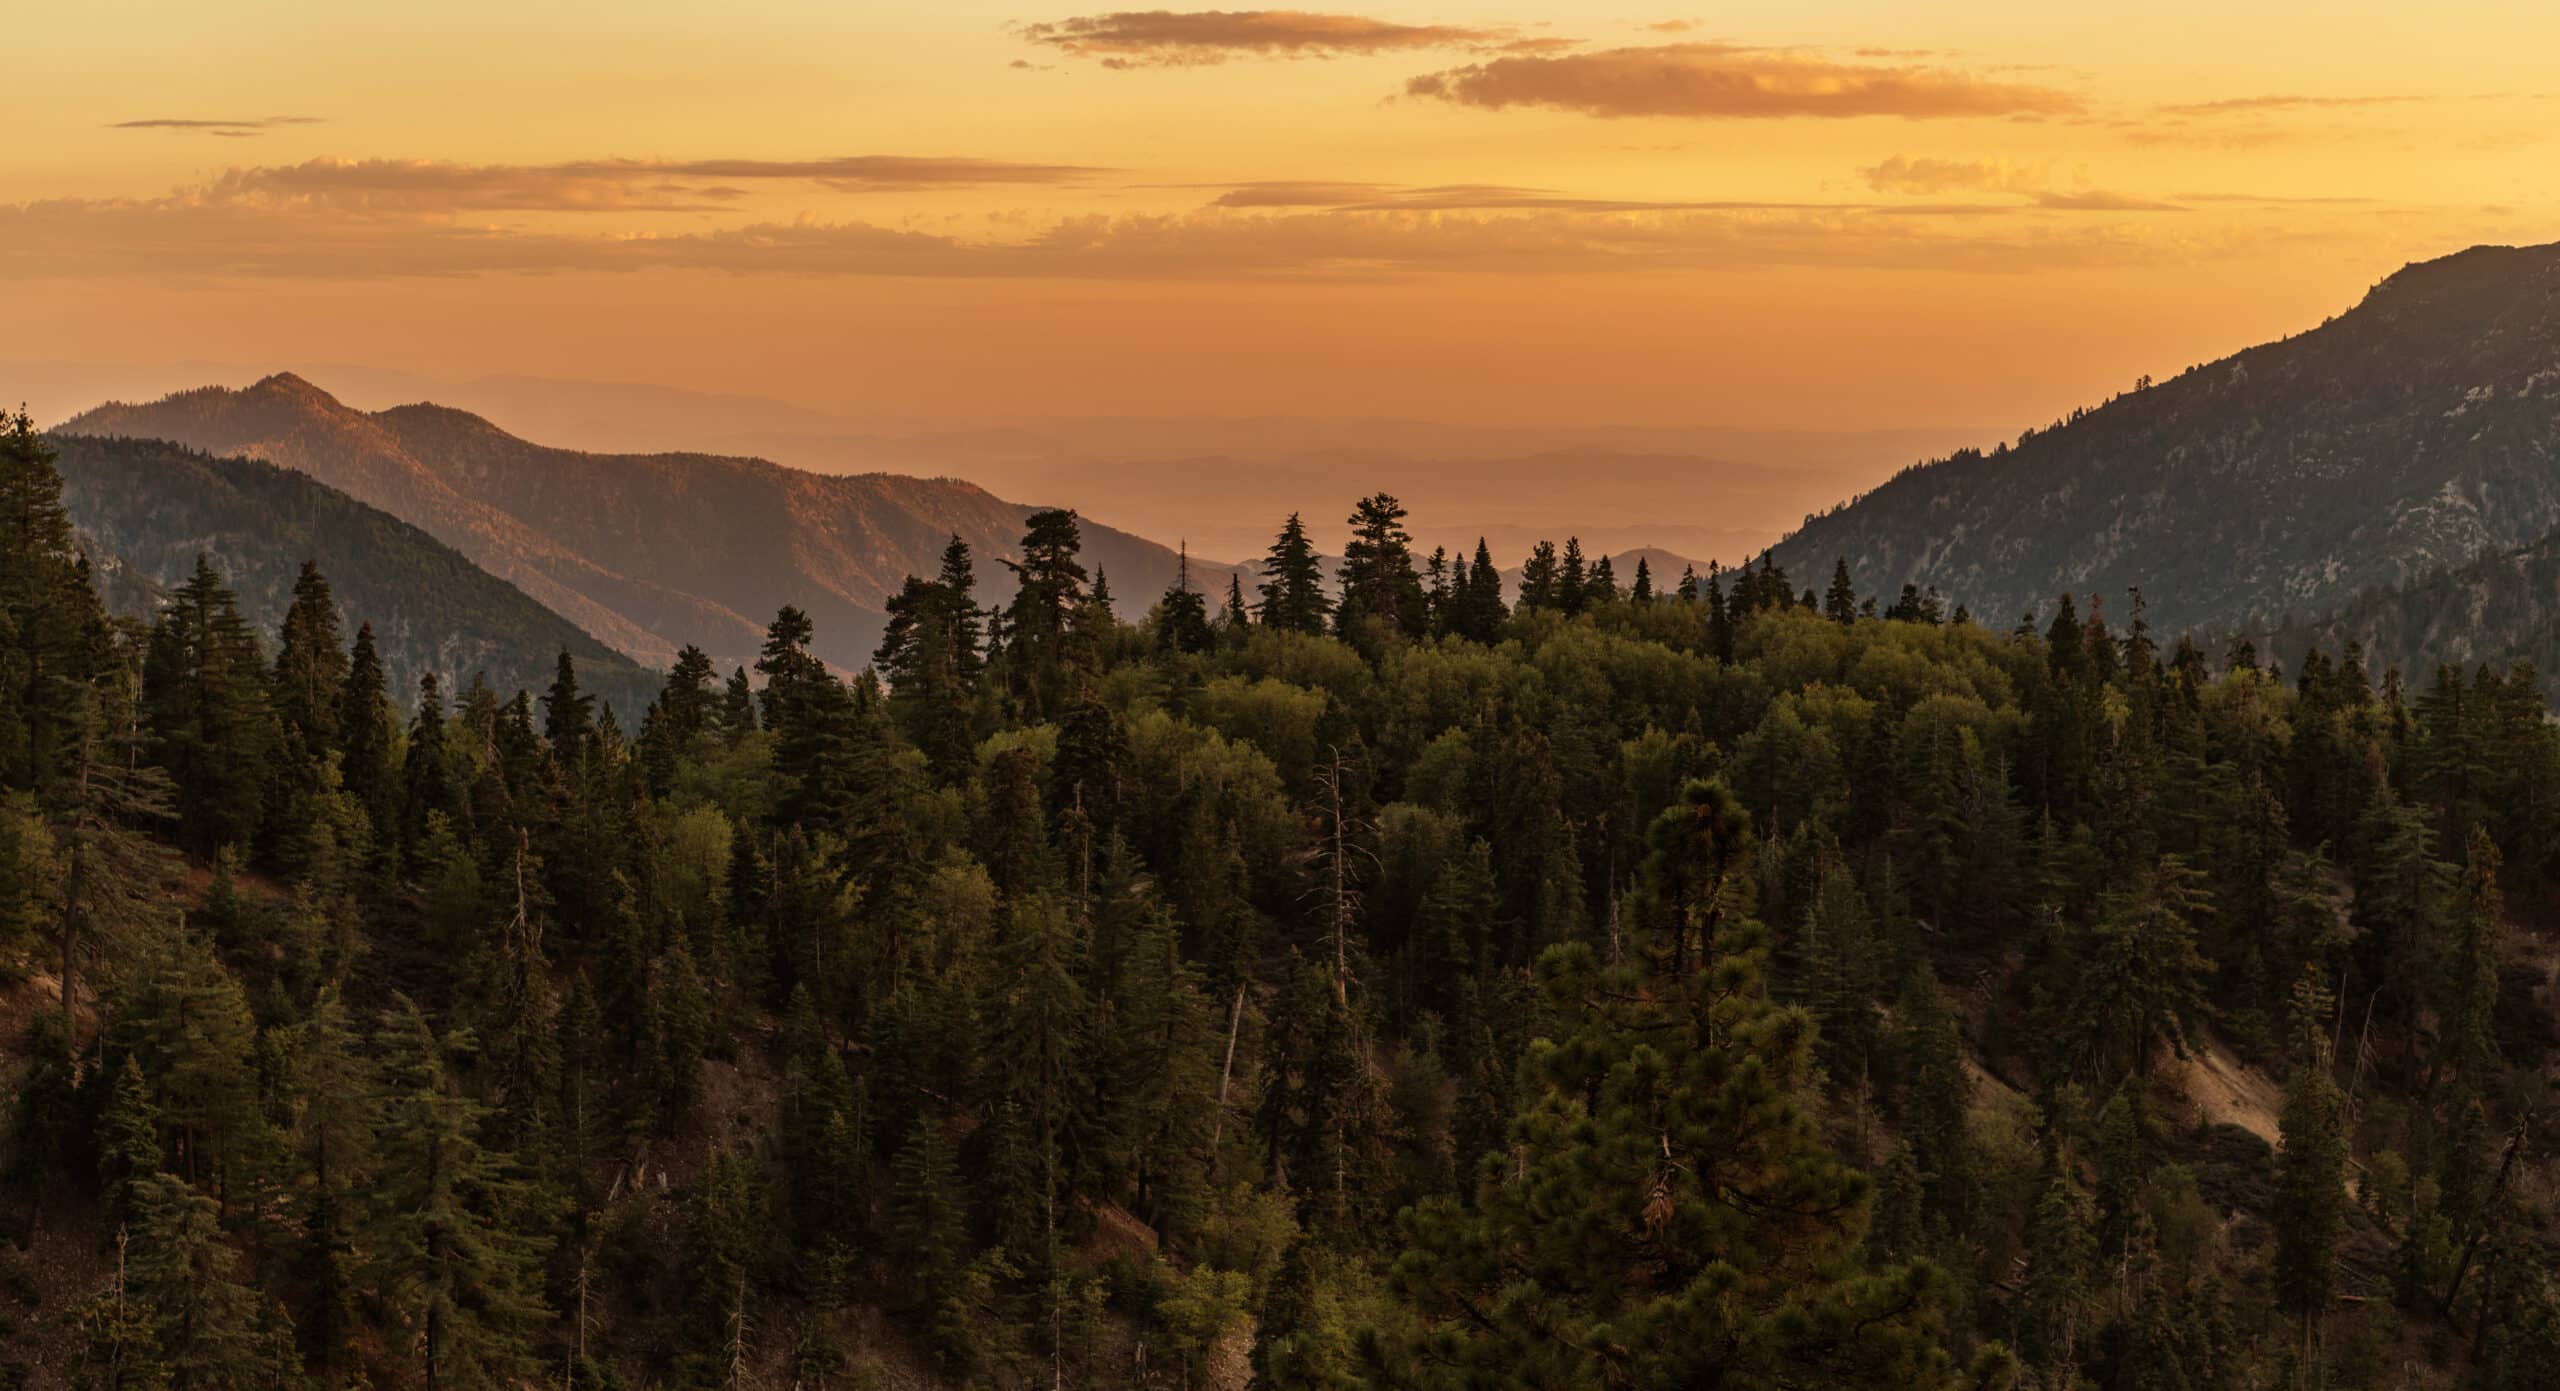 Scenic California San Bernardino National Forest Mountains Sunset. Big Bear Lake Area. United States of America.